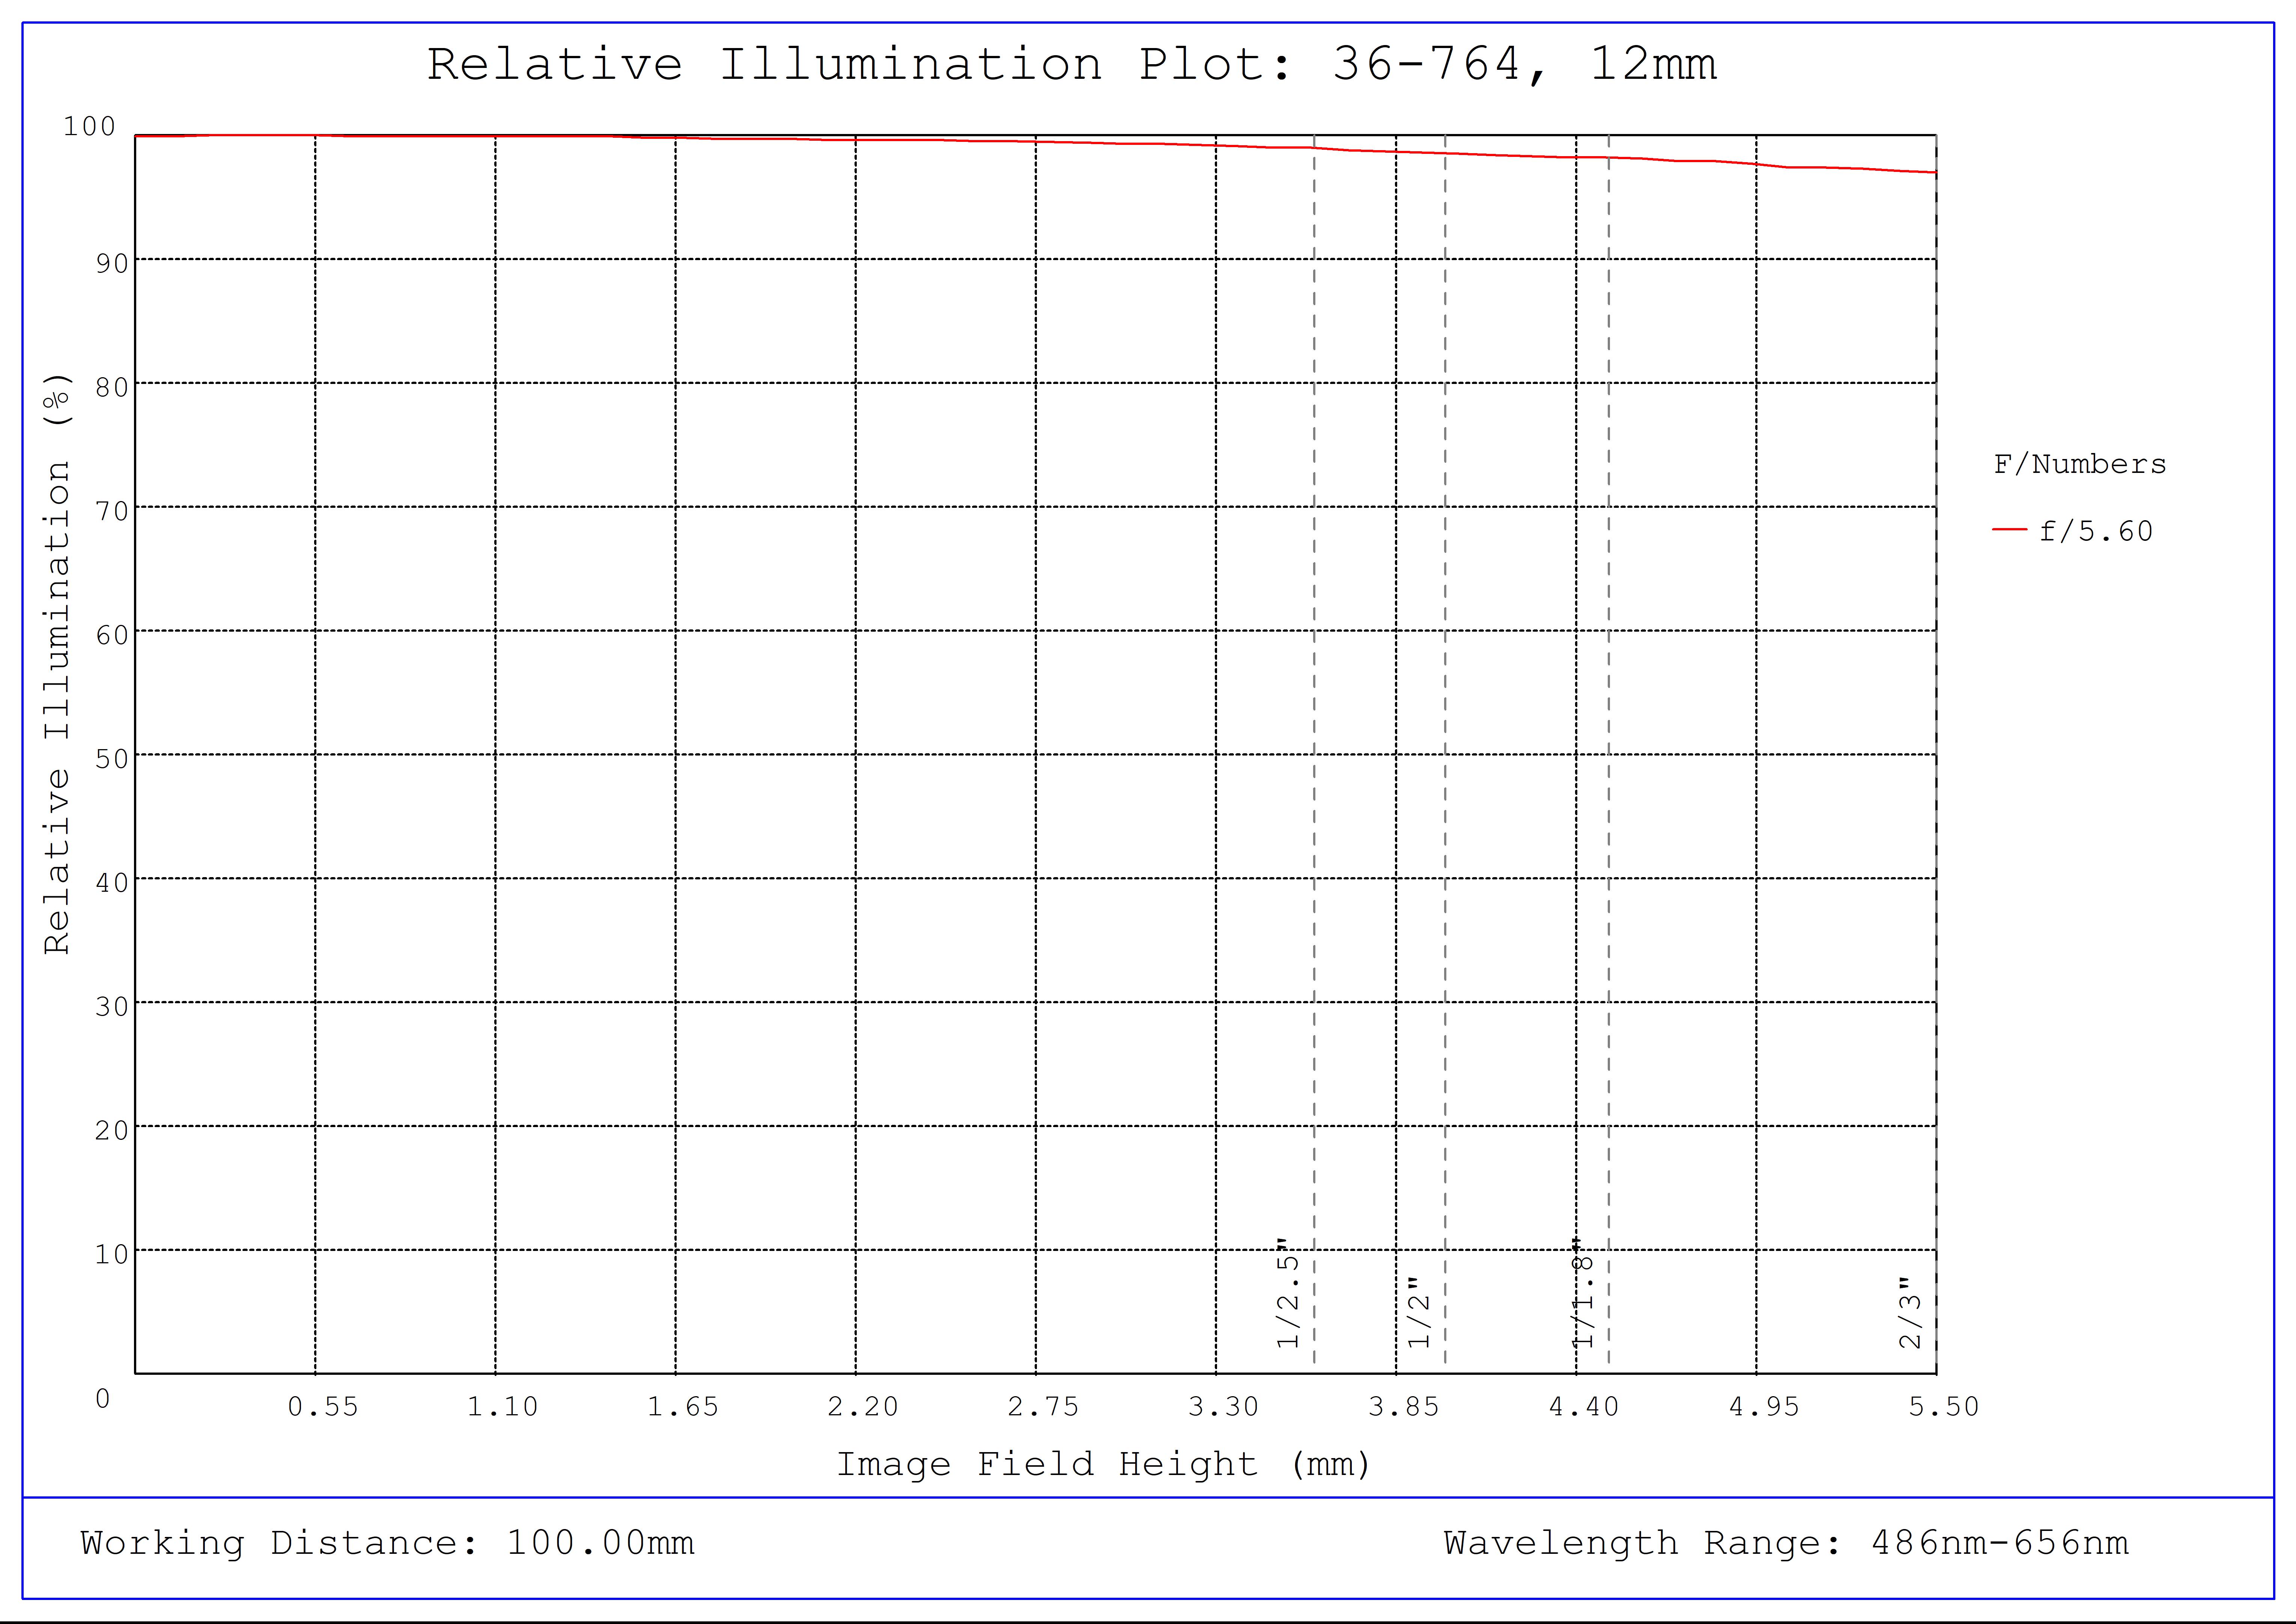 #36-764, 12mm f/5.6, 400-2000mm Primary WD, HRi Series Fixed Focal Length Lens, Relative Illumination Plot